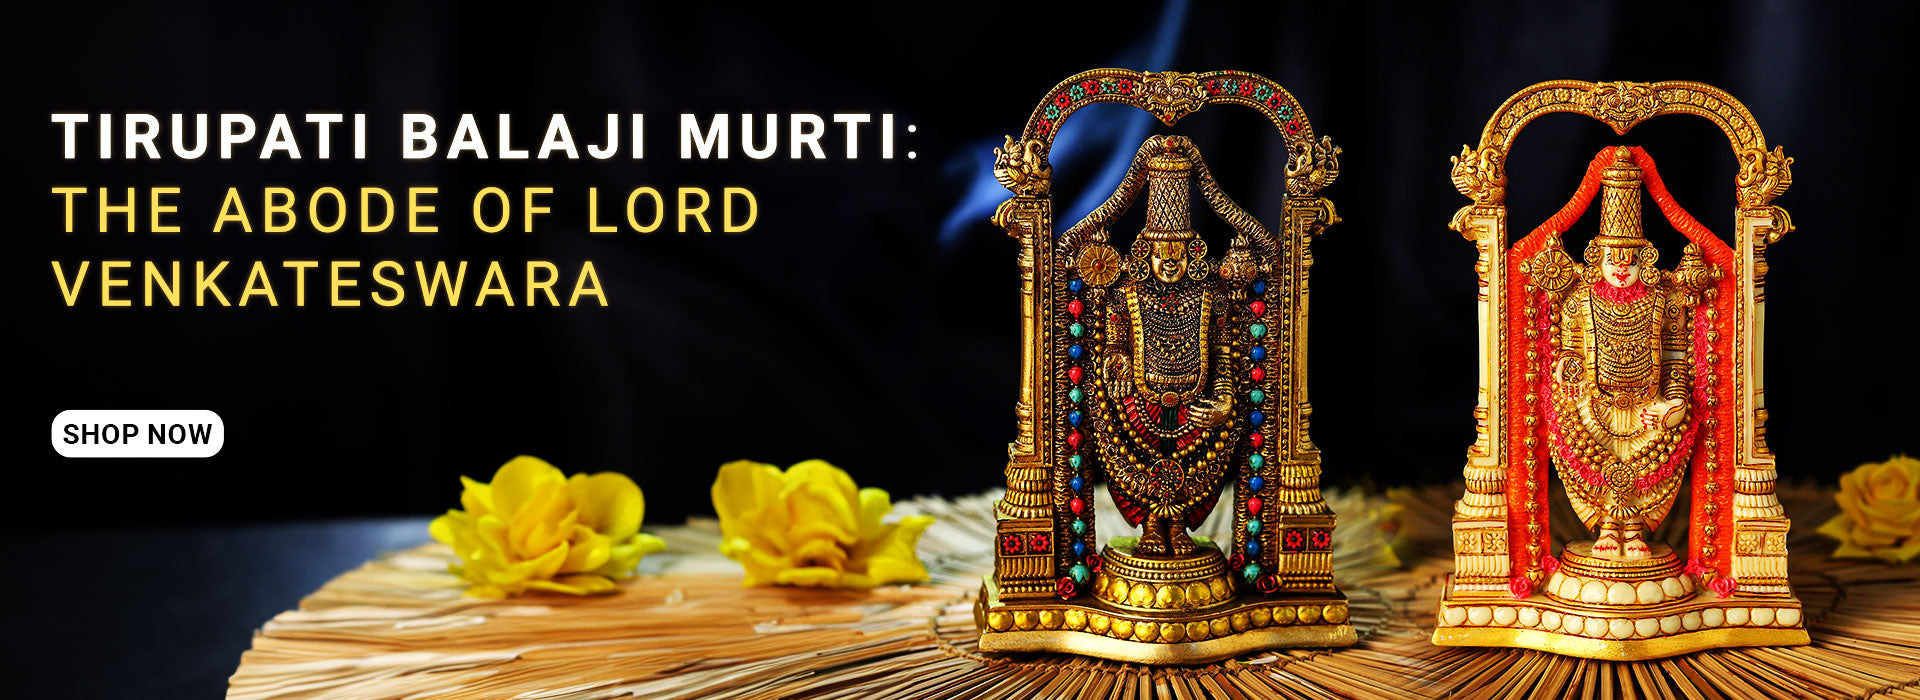 Tirupati Balaji Murti: The Abode of Lord Venkateswara